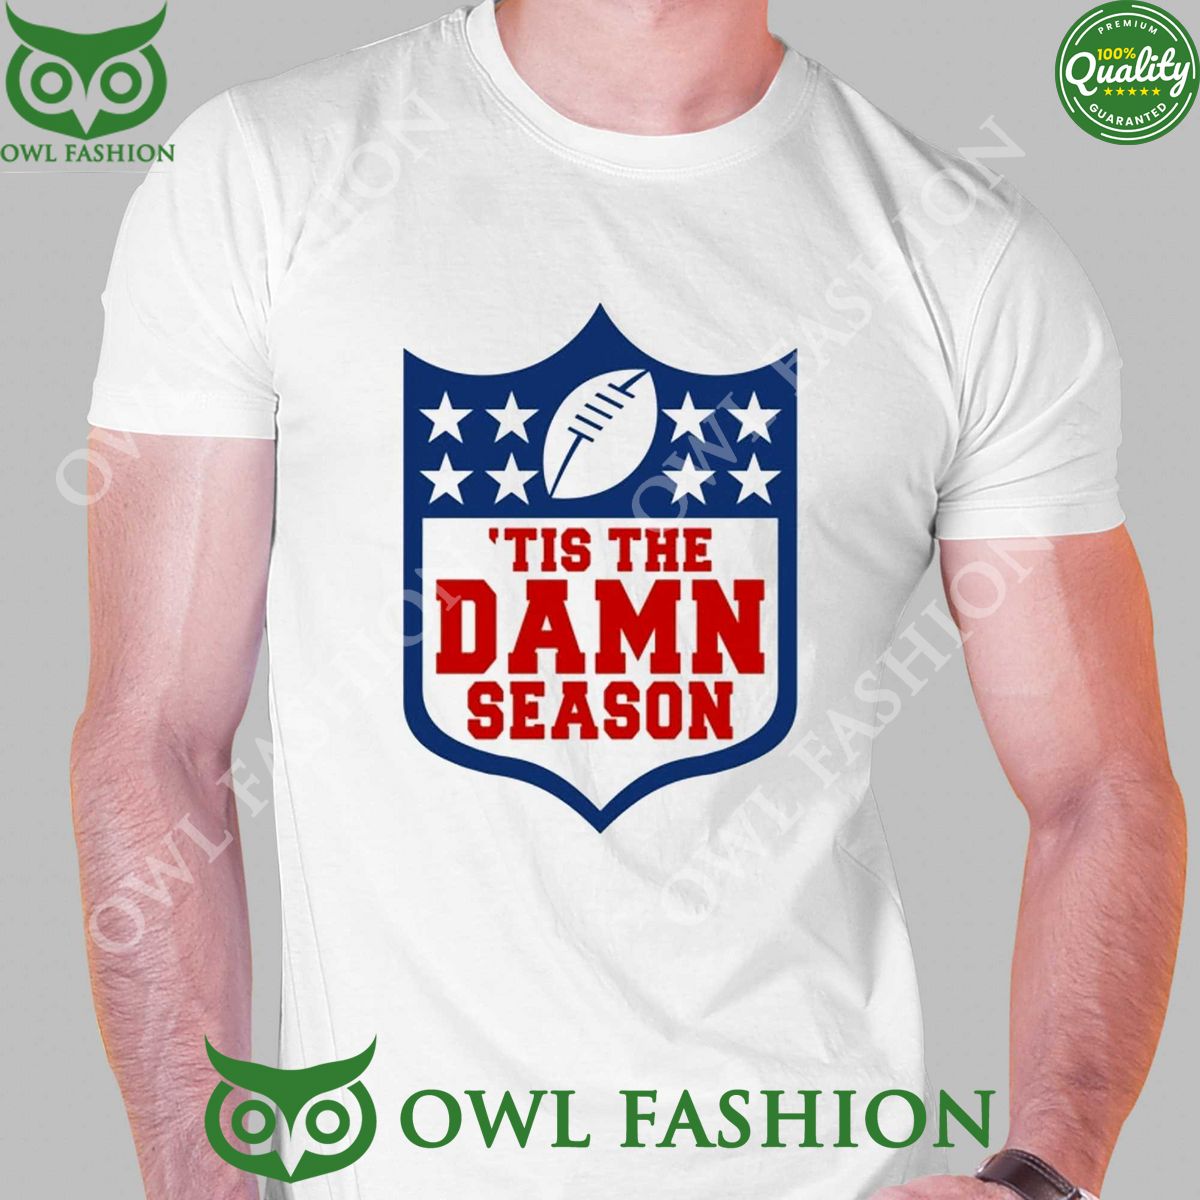 Tis The Damn Season t shirt The design exudes professionalism and class.